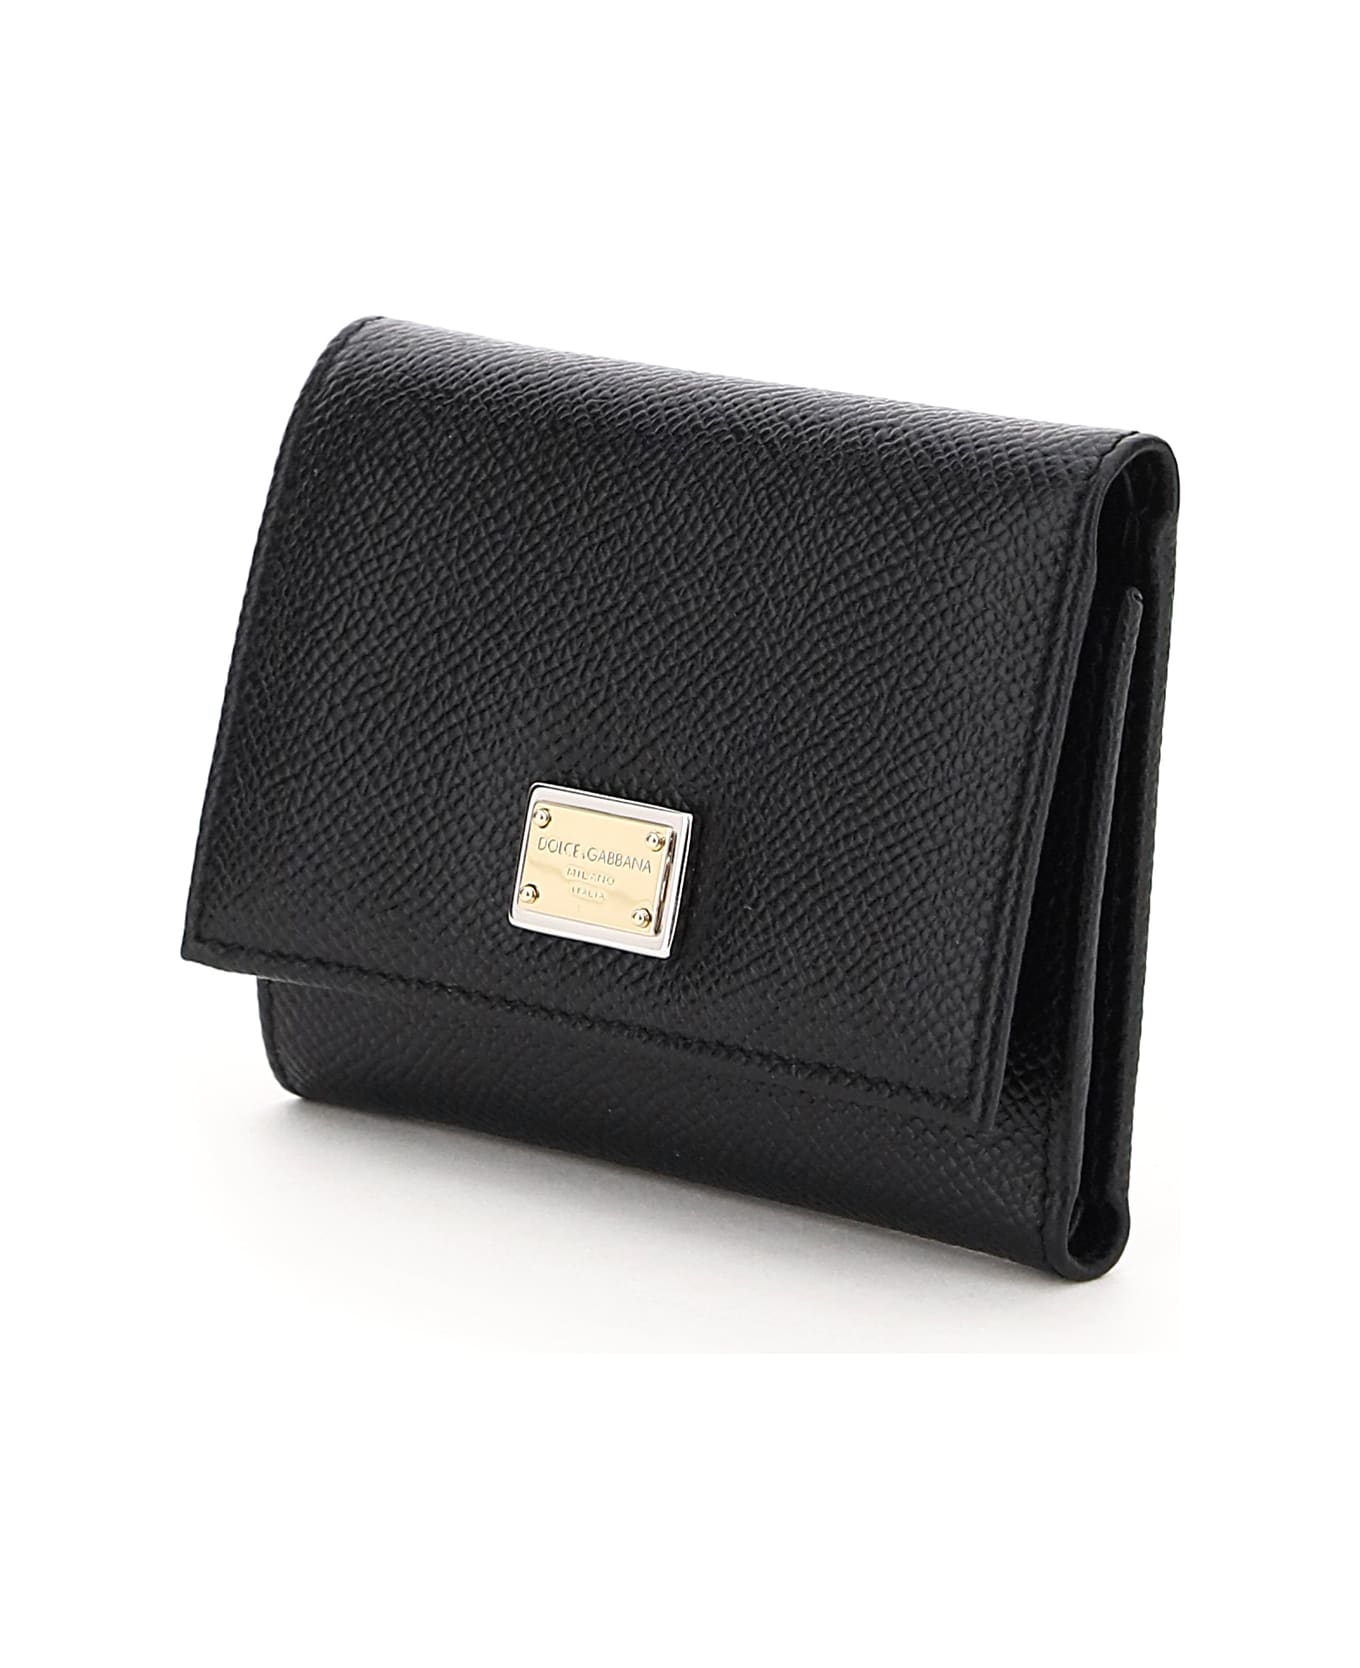 Dolce & Gabbana French Flap Wallet - Nero